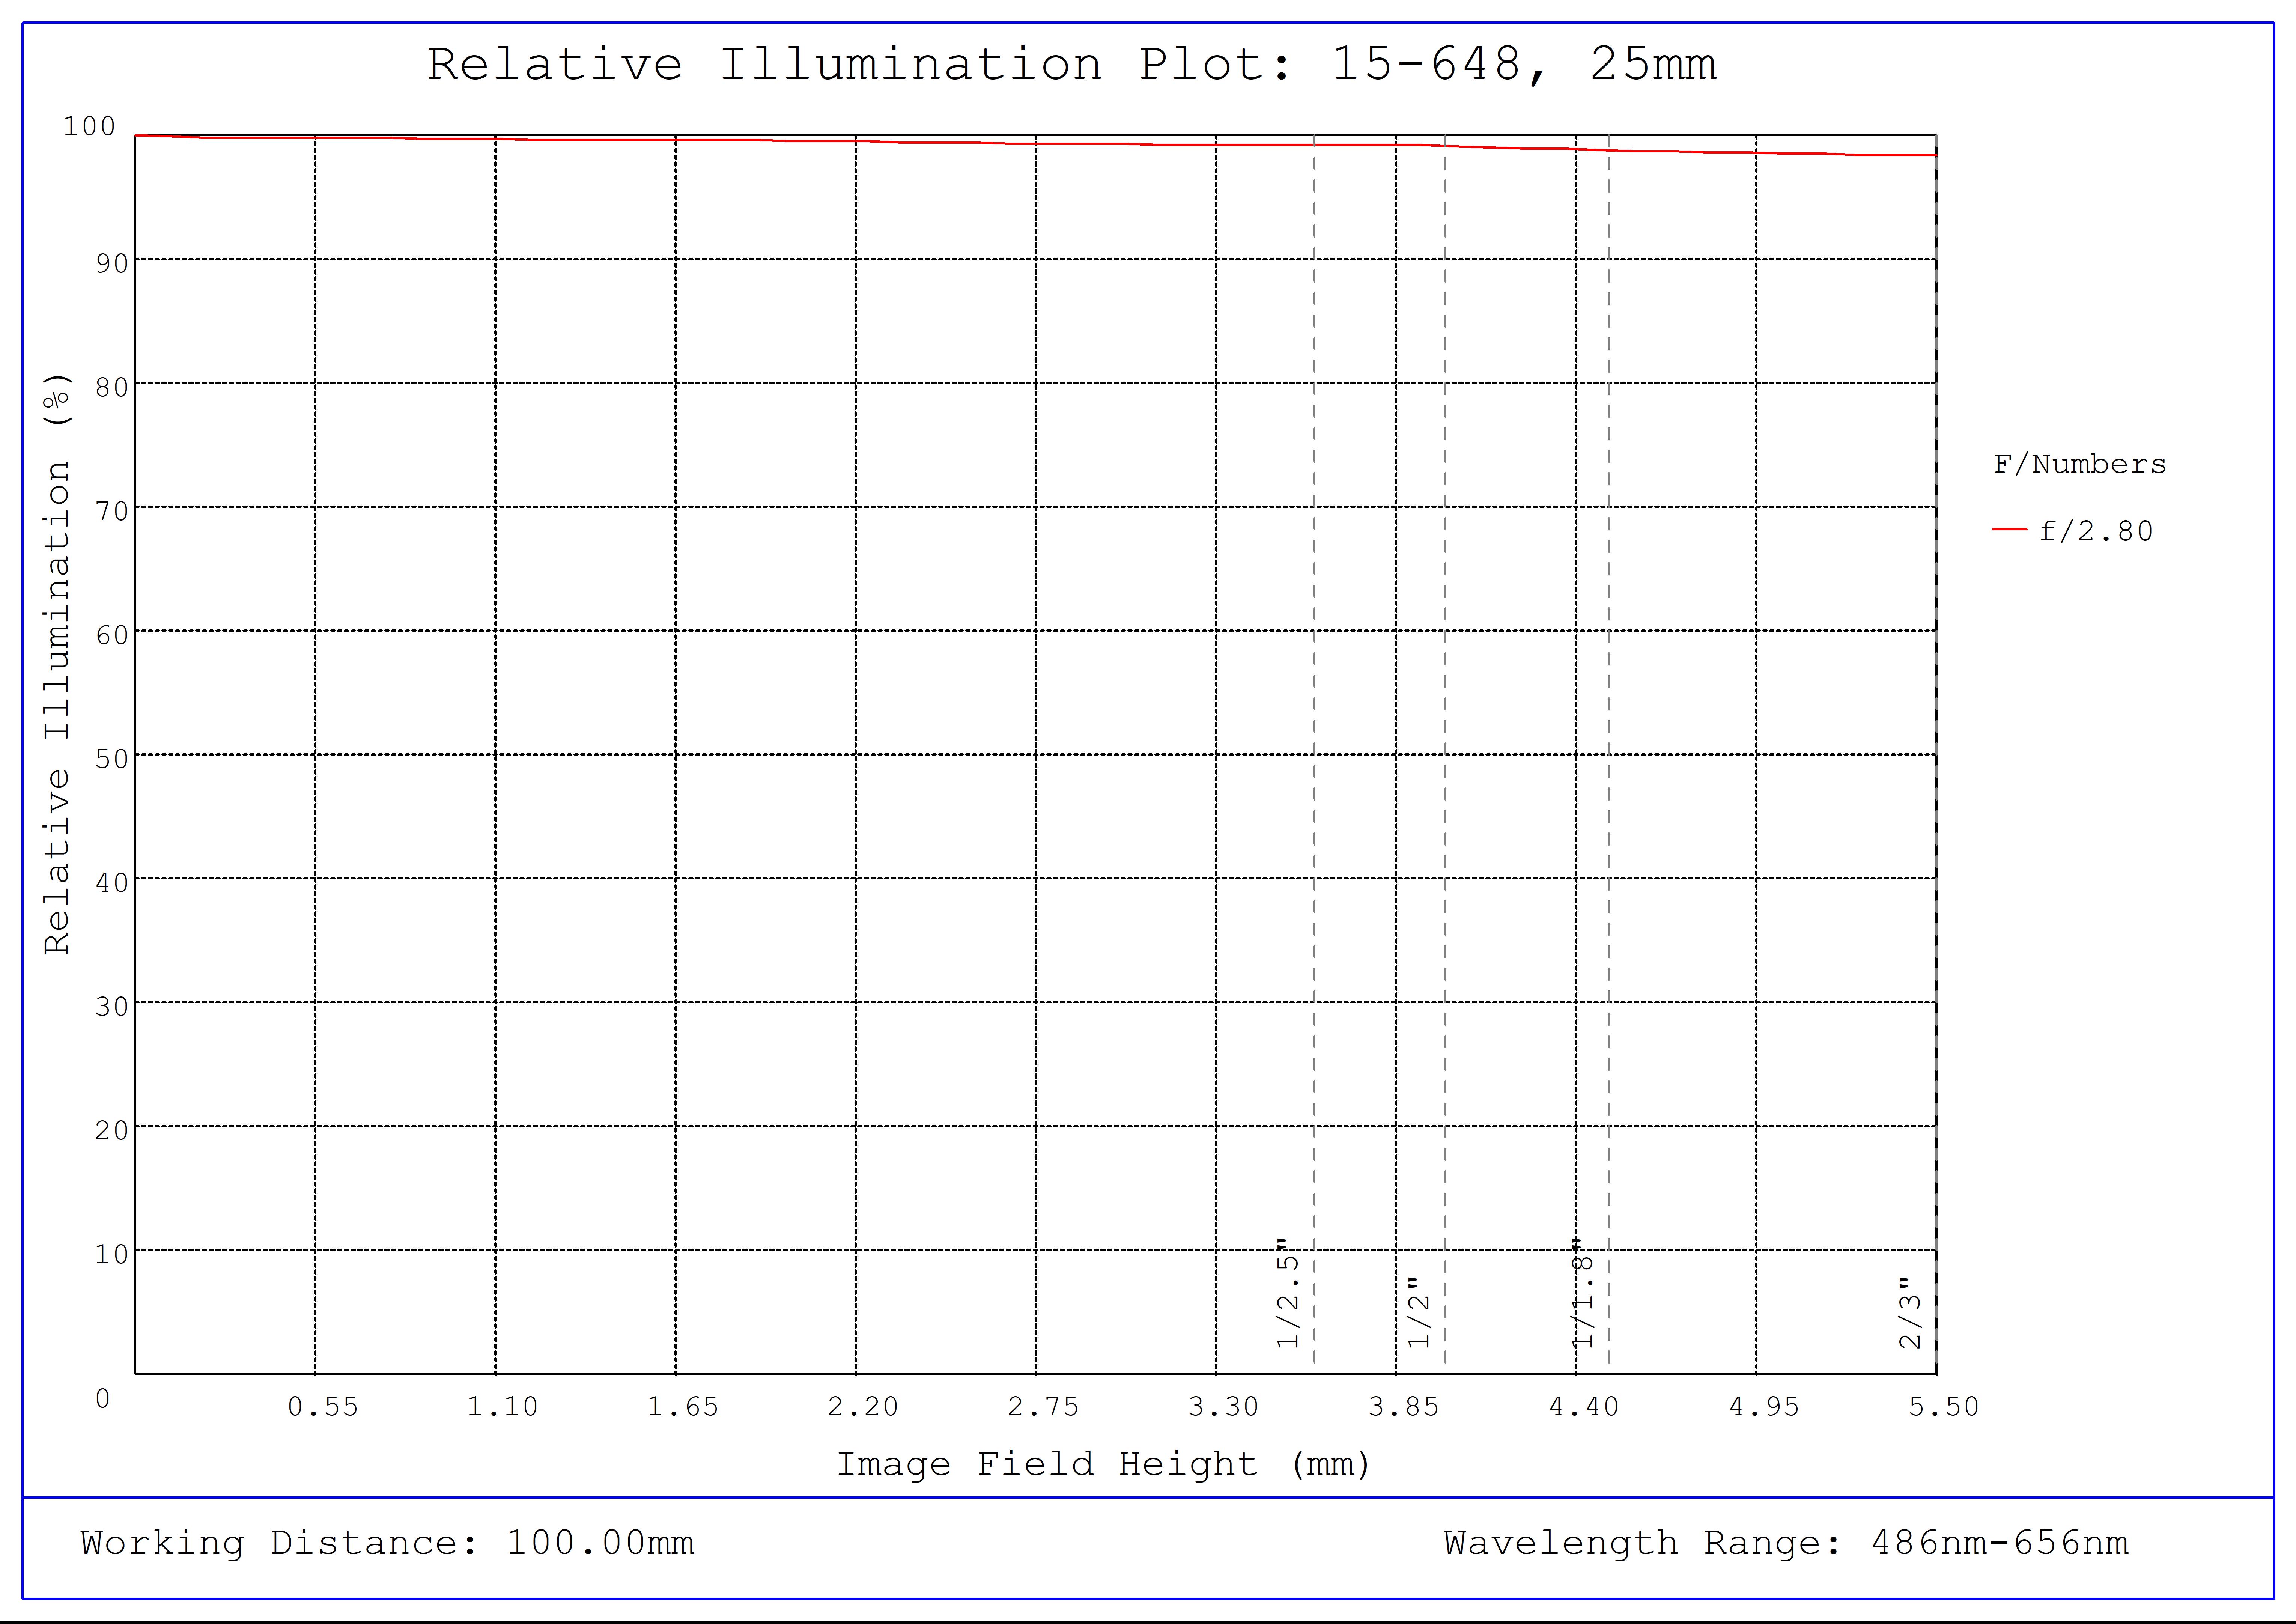 #15-648, 25mm, f/2.8 Cw Series Fixed Focal Length Lens, Relative Illumination Plot